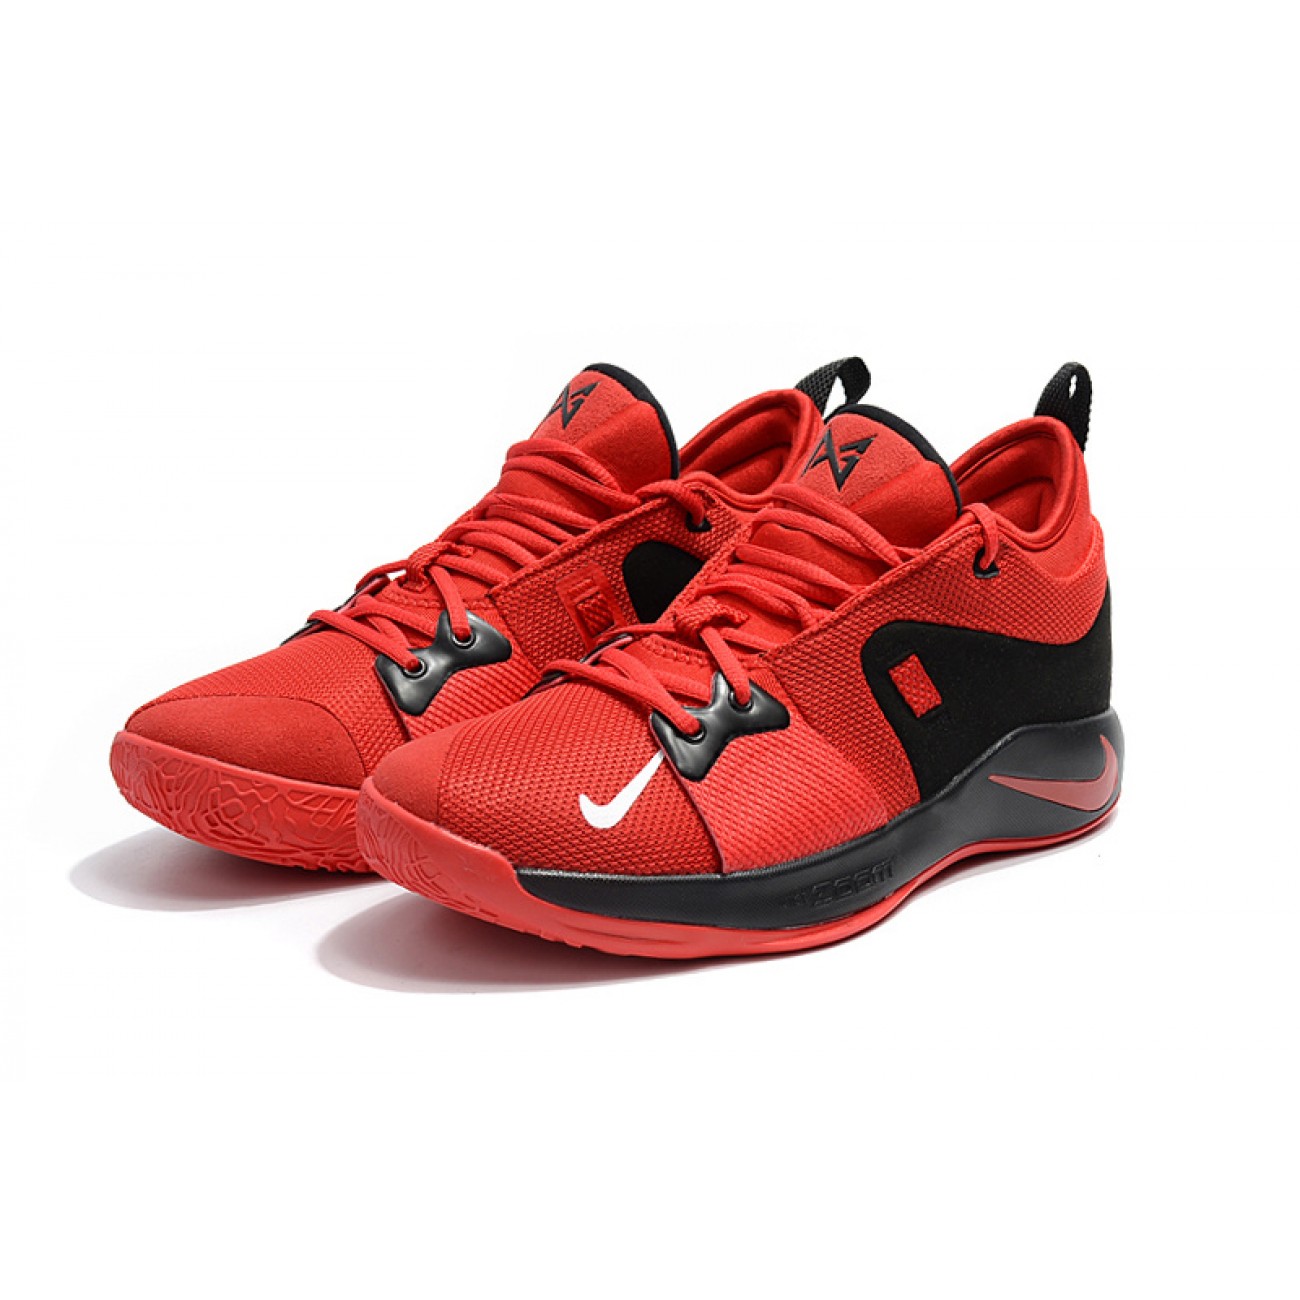 Nike PG 2 Red/Black